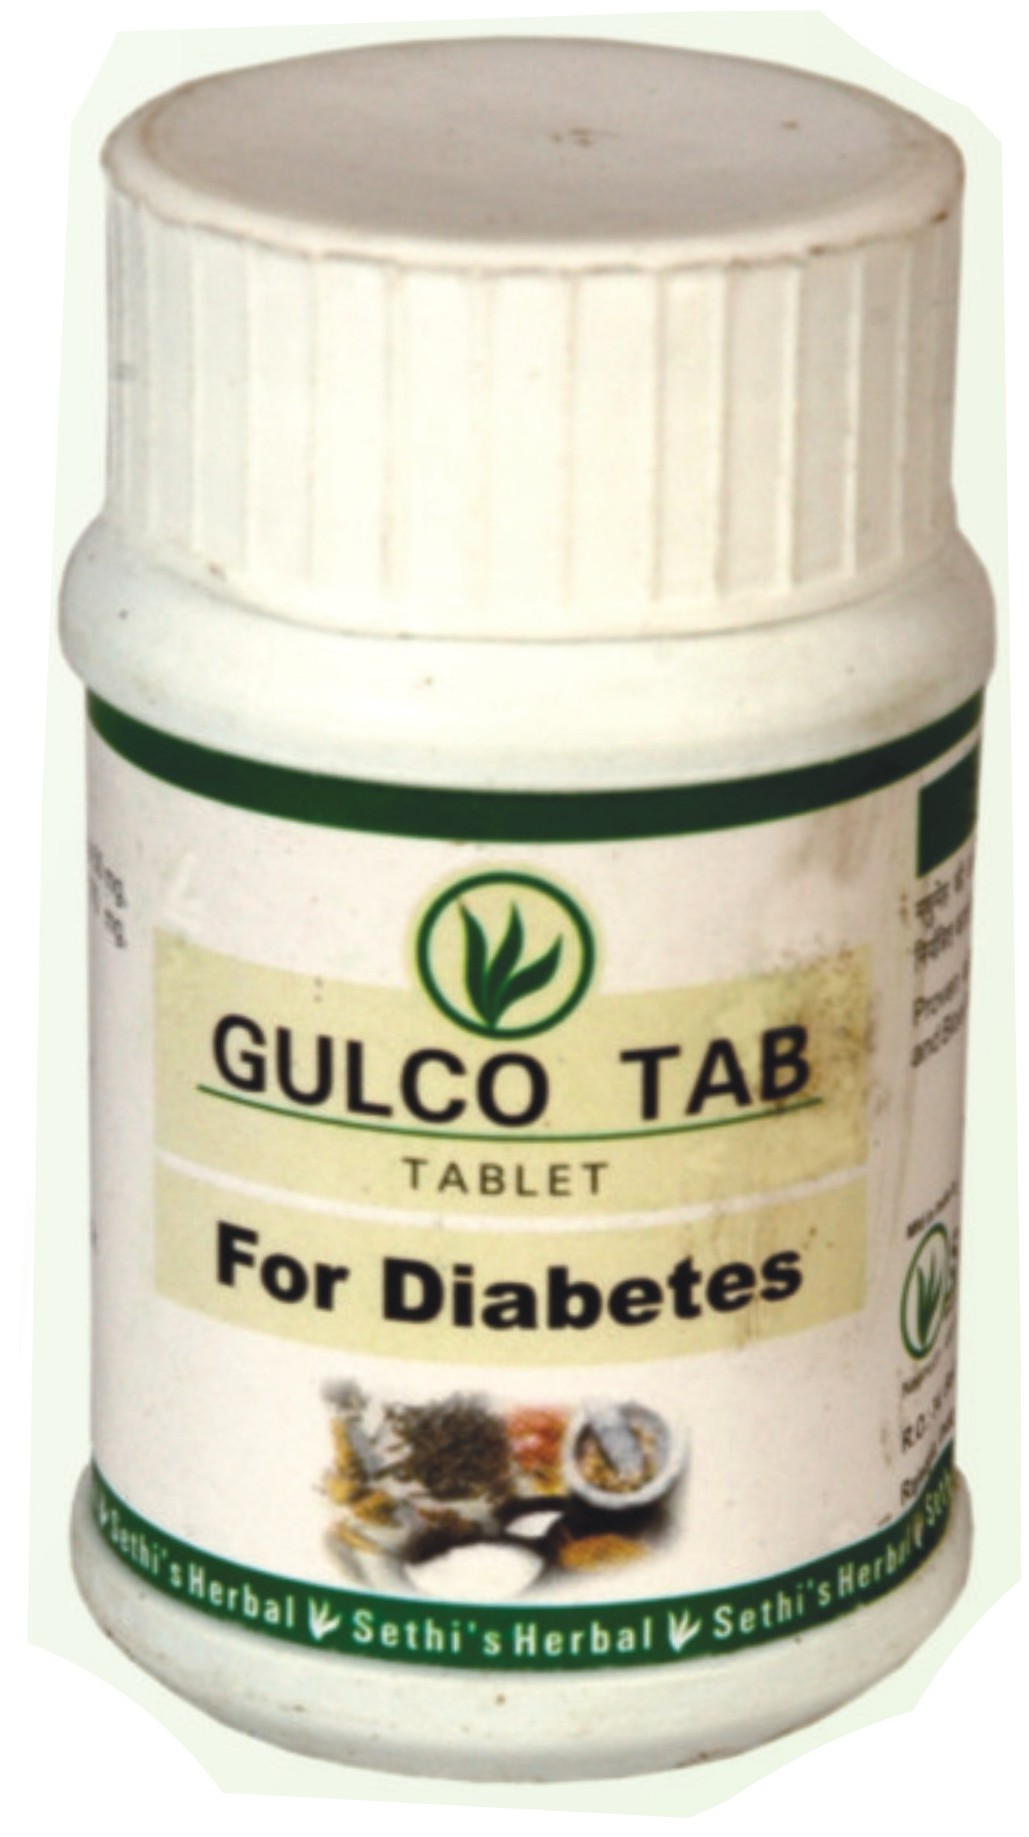 Gluco tablet